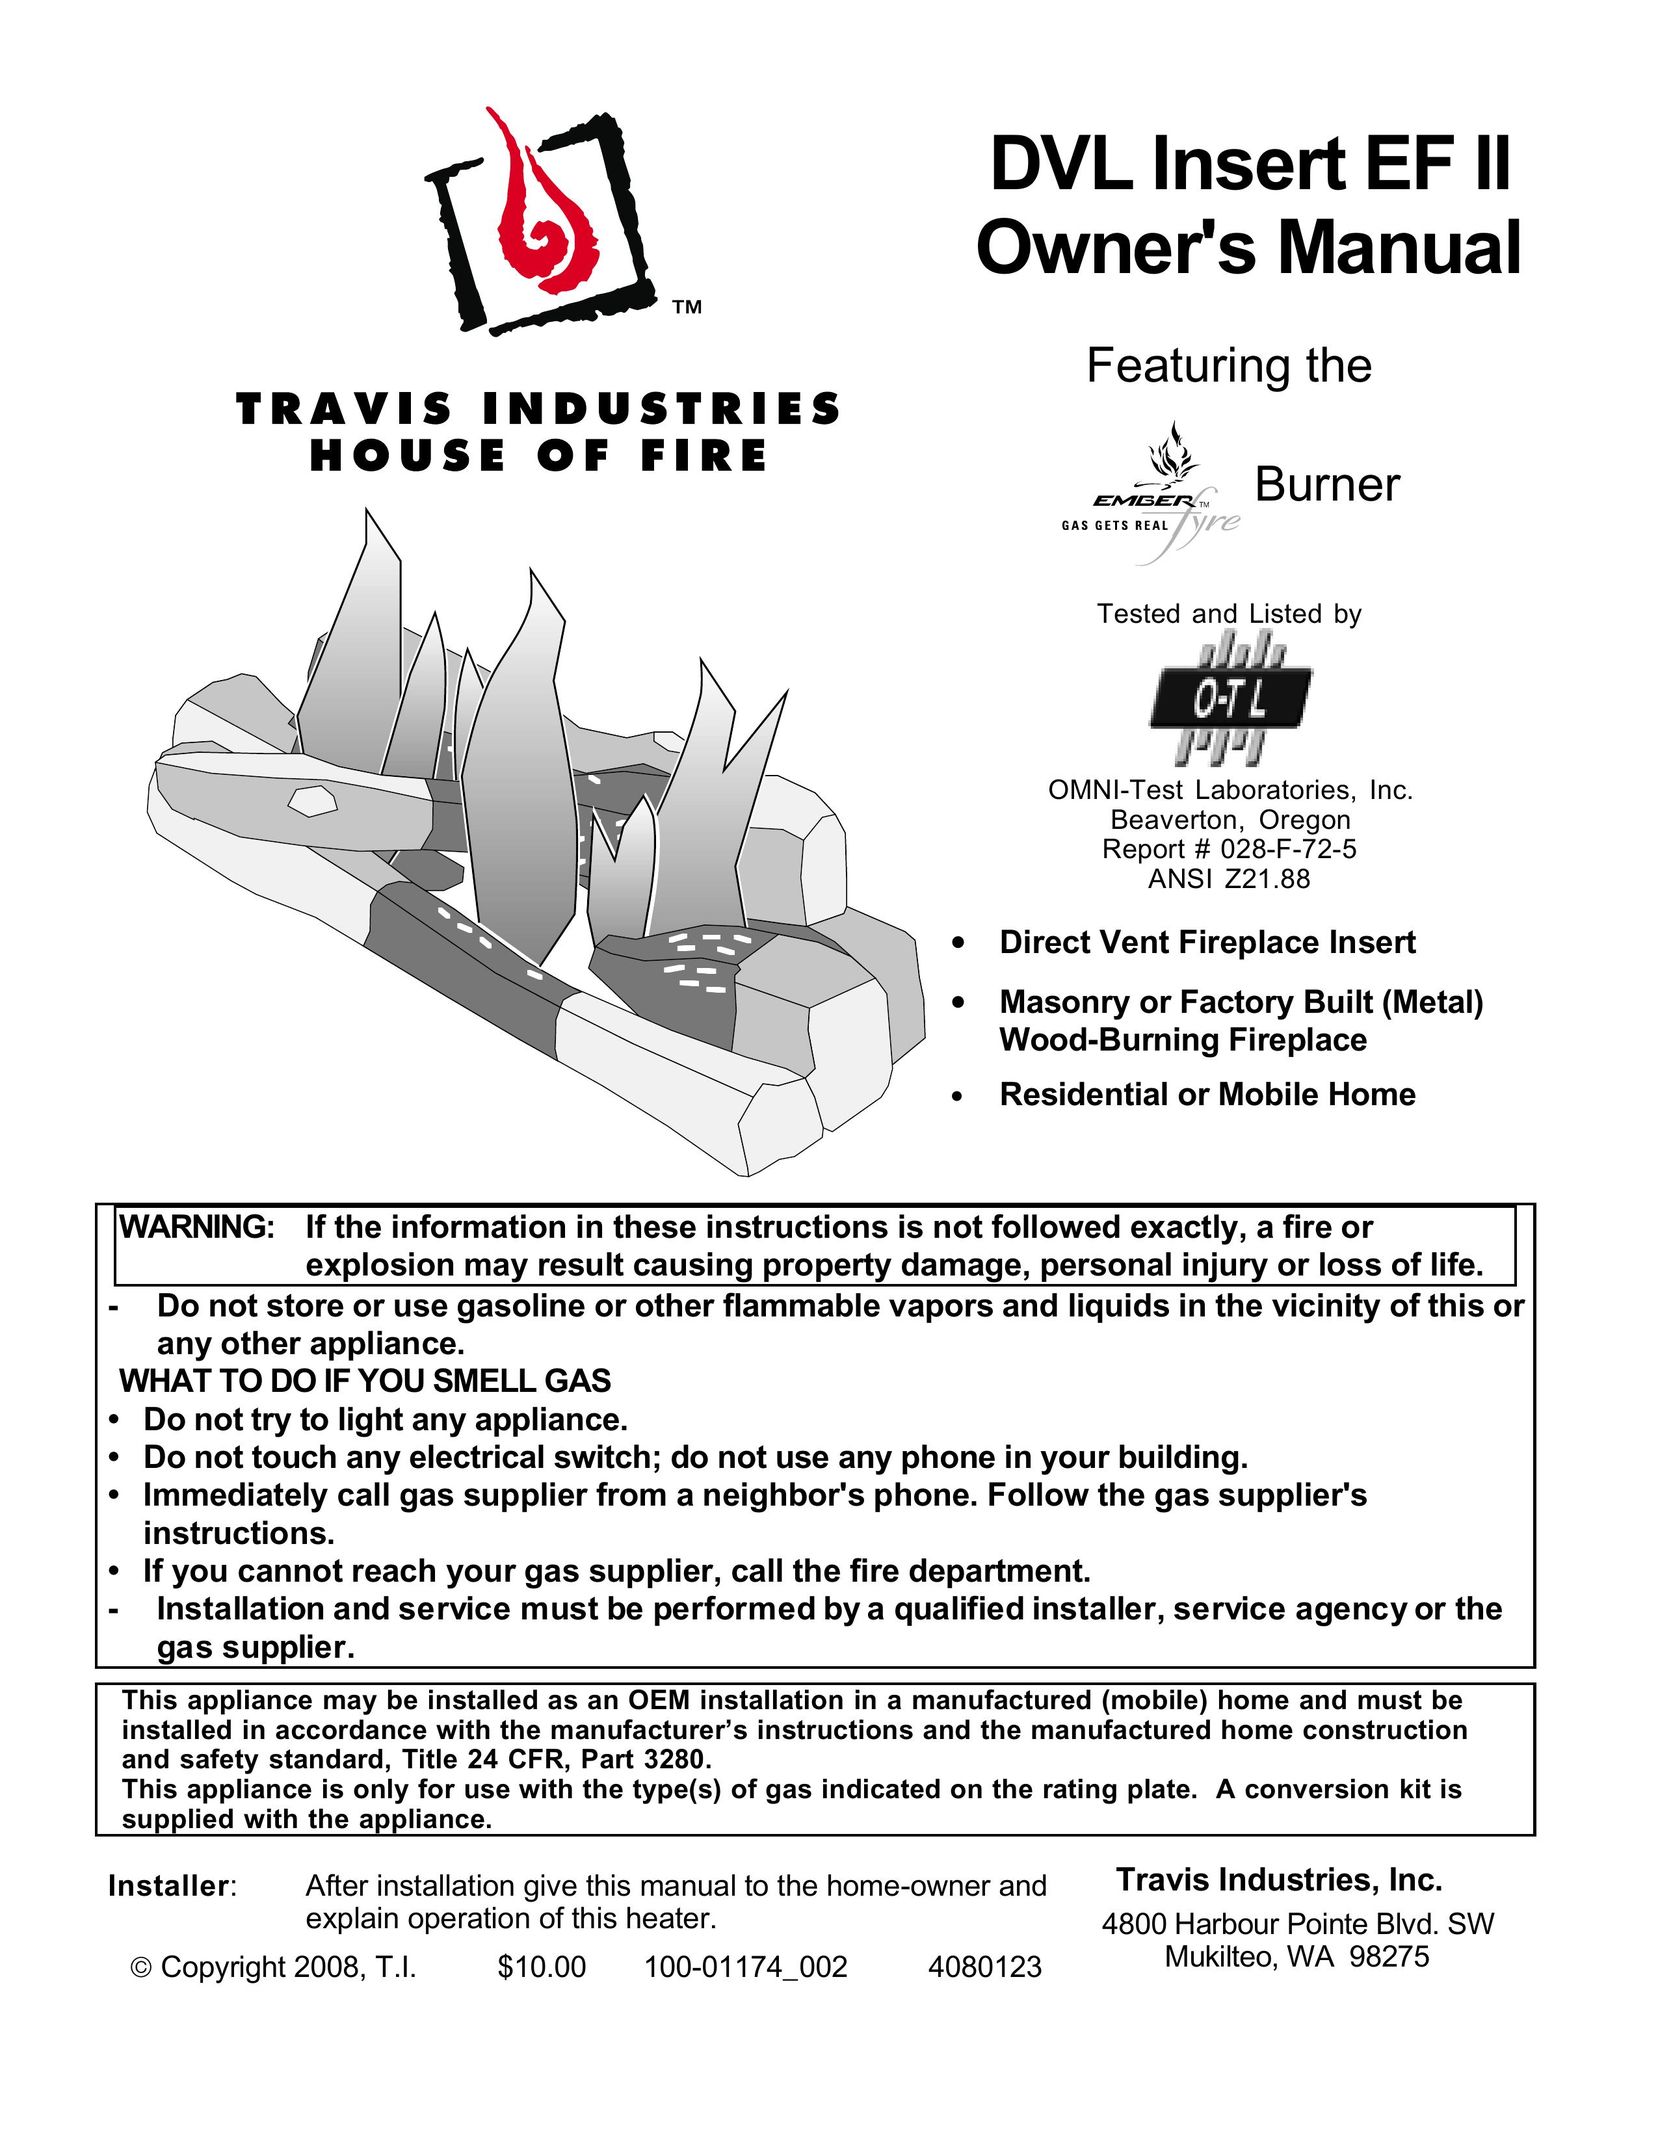 Avalon Stoves DVL Insert EF II Indoor Fireplace User Manual